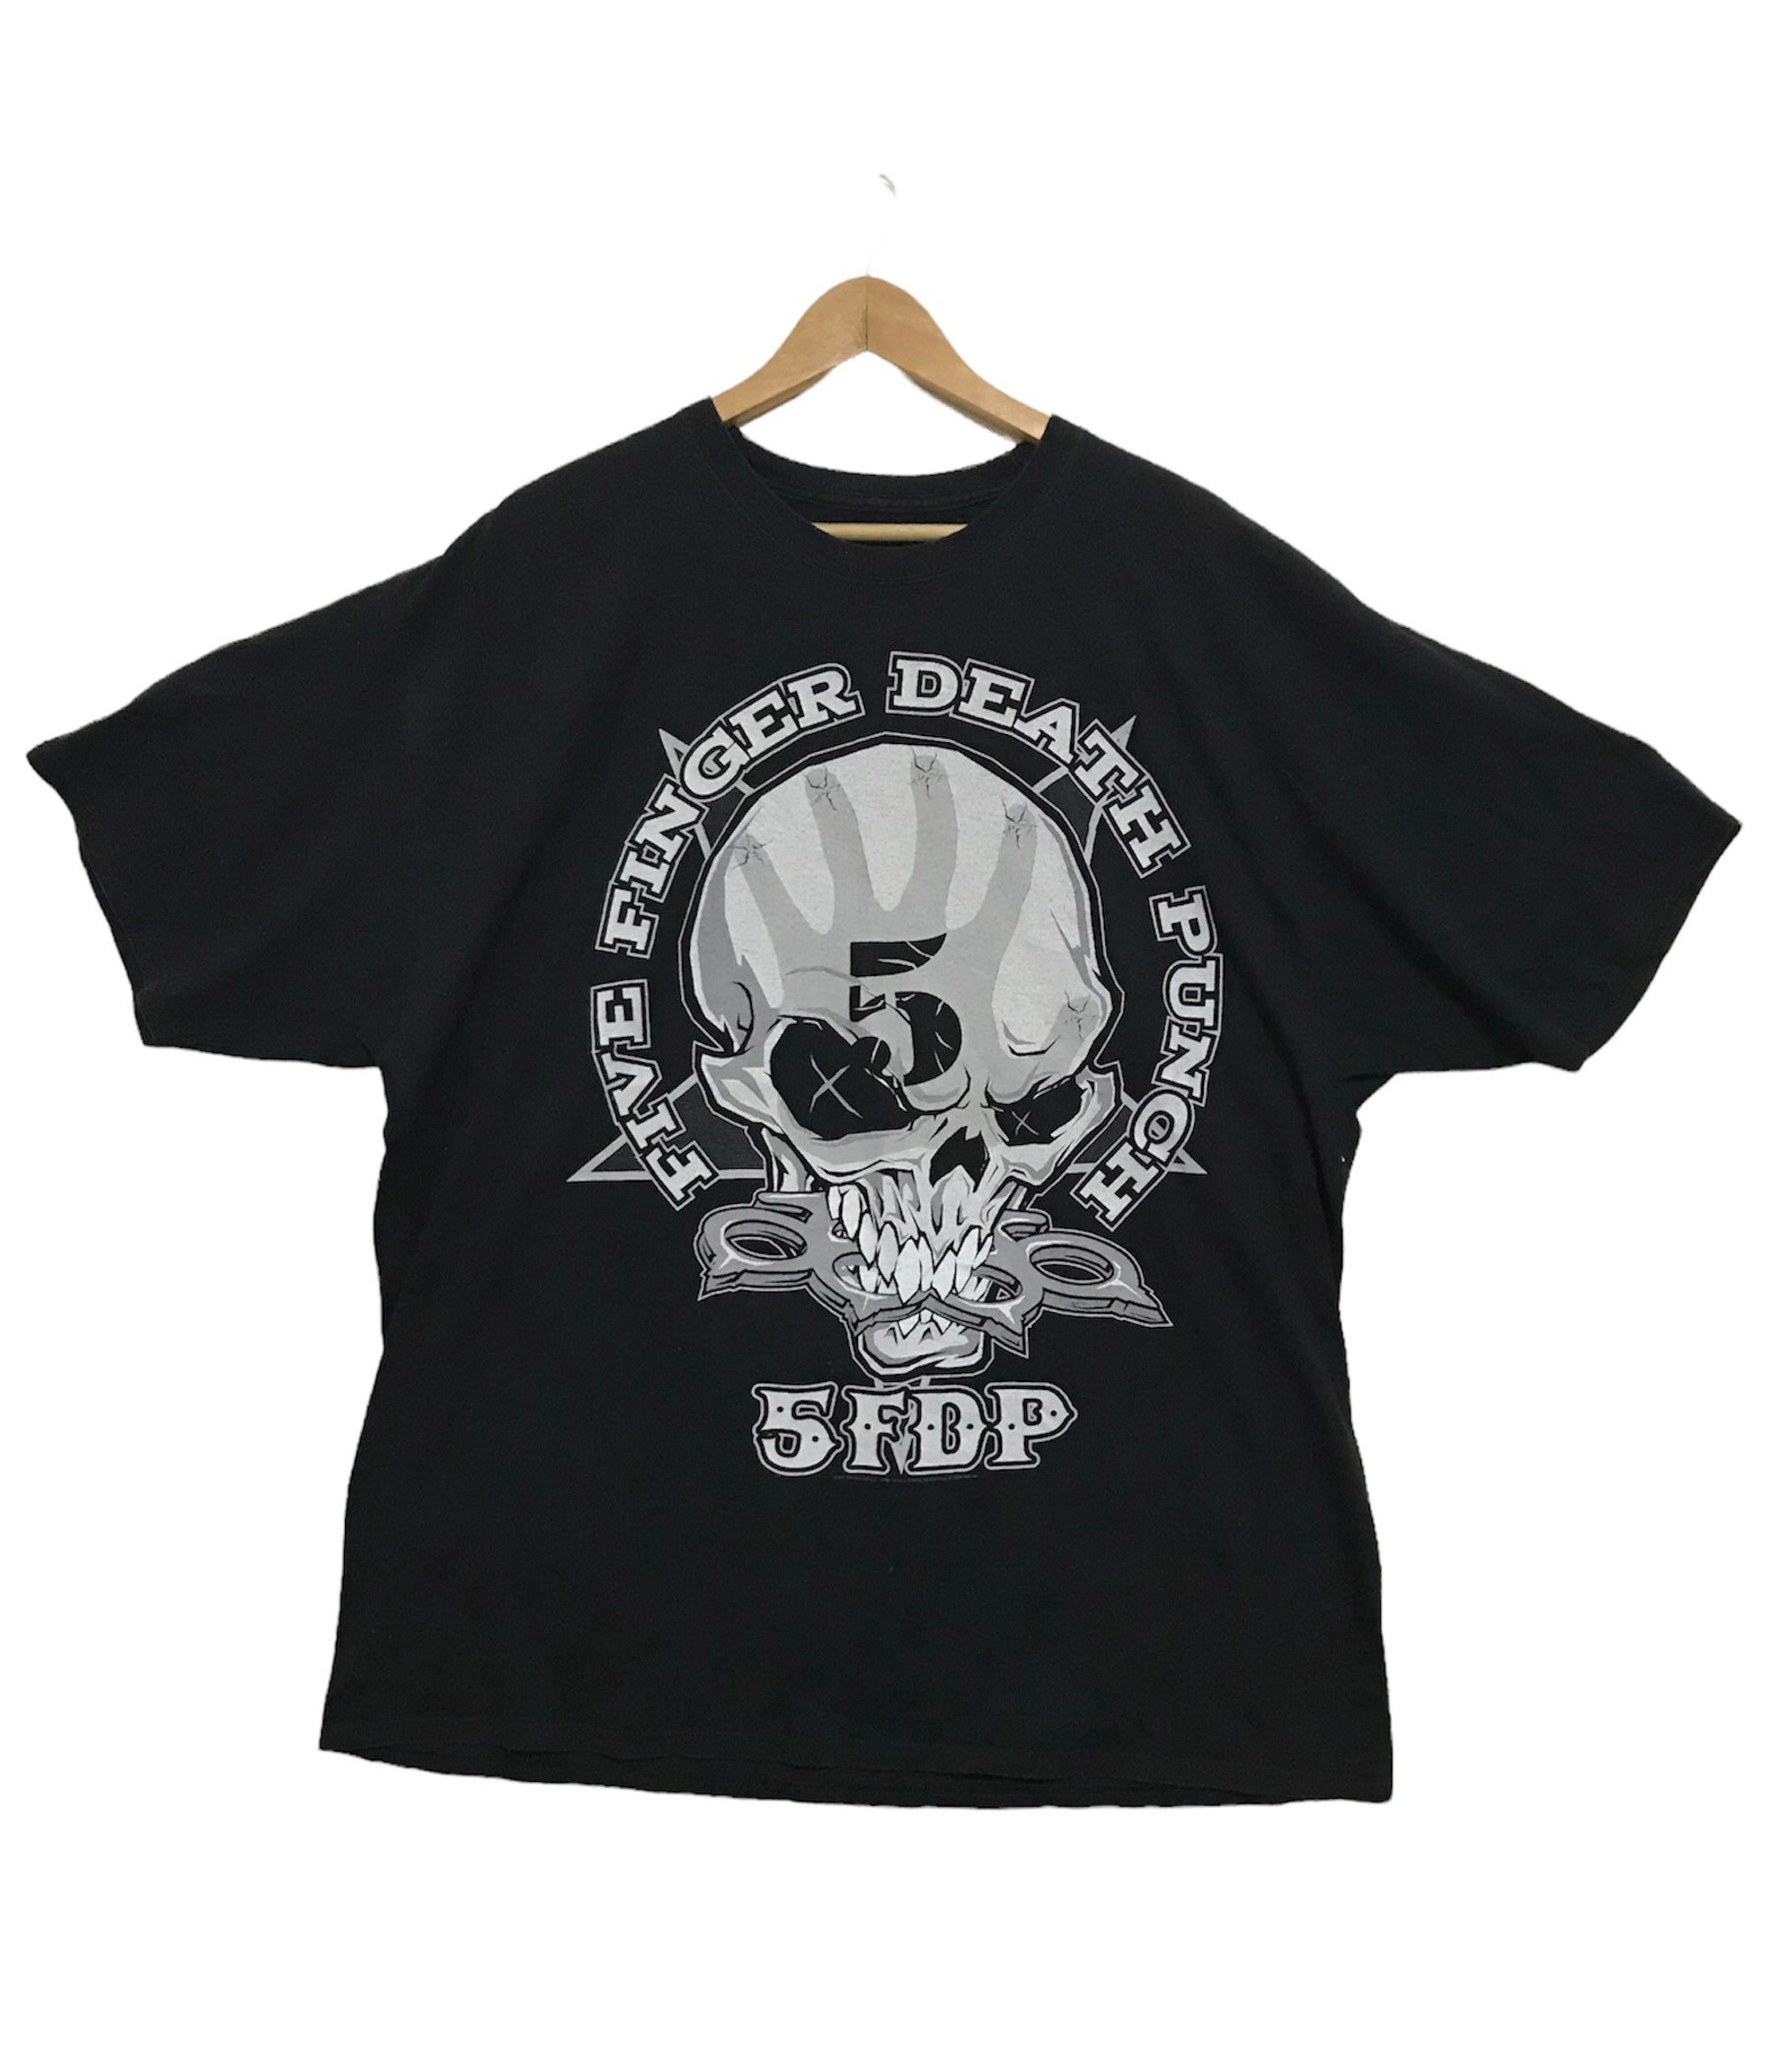 Five Finger Death Punch Band Tshirt